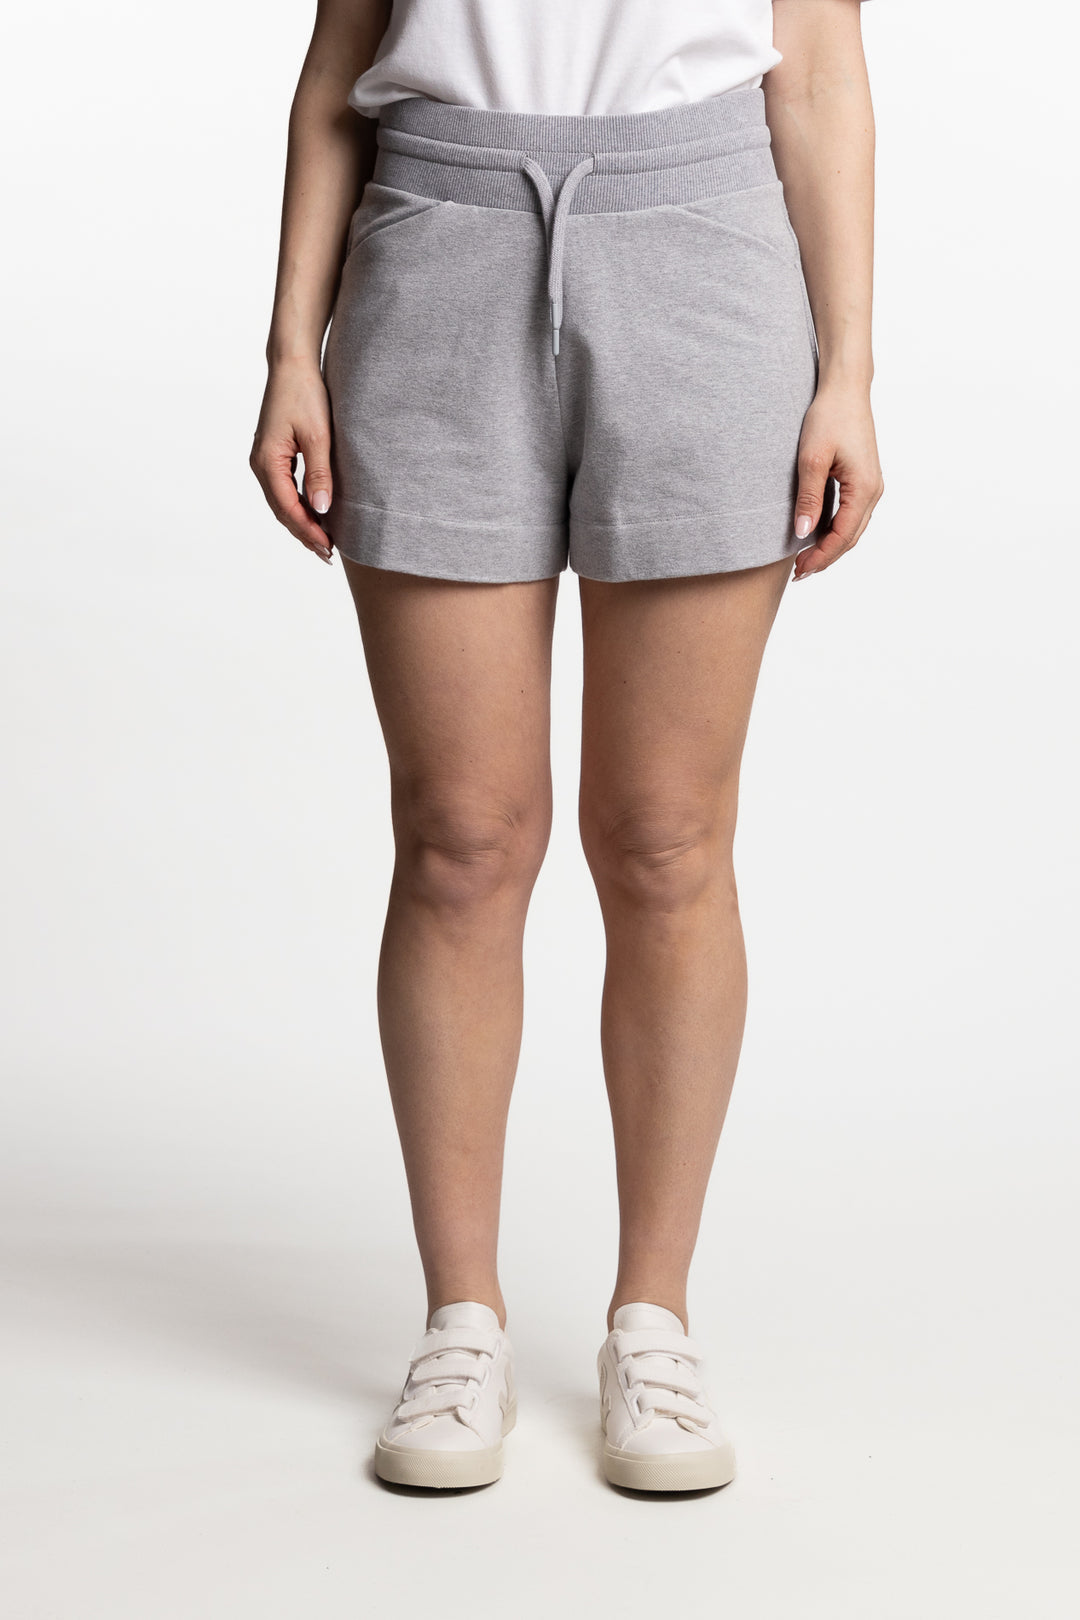 Kylie Shorts- Grey